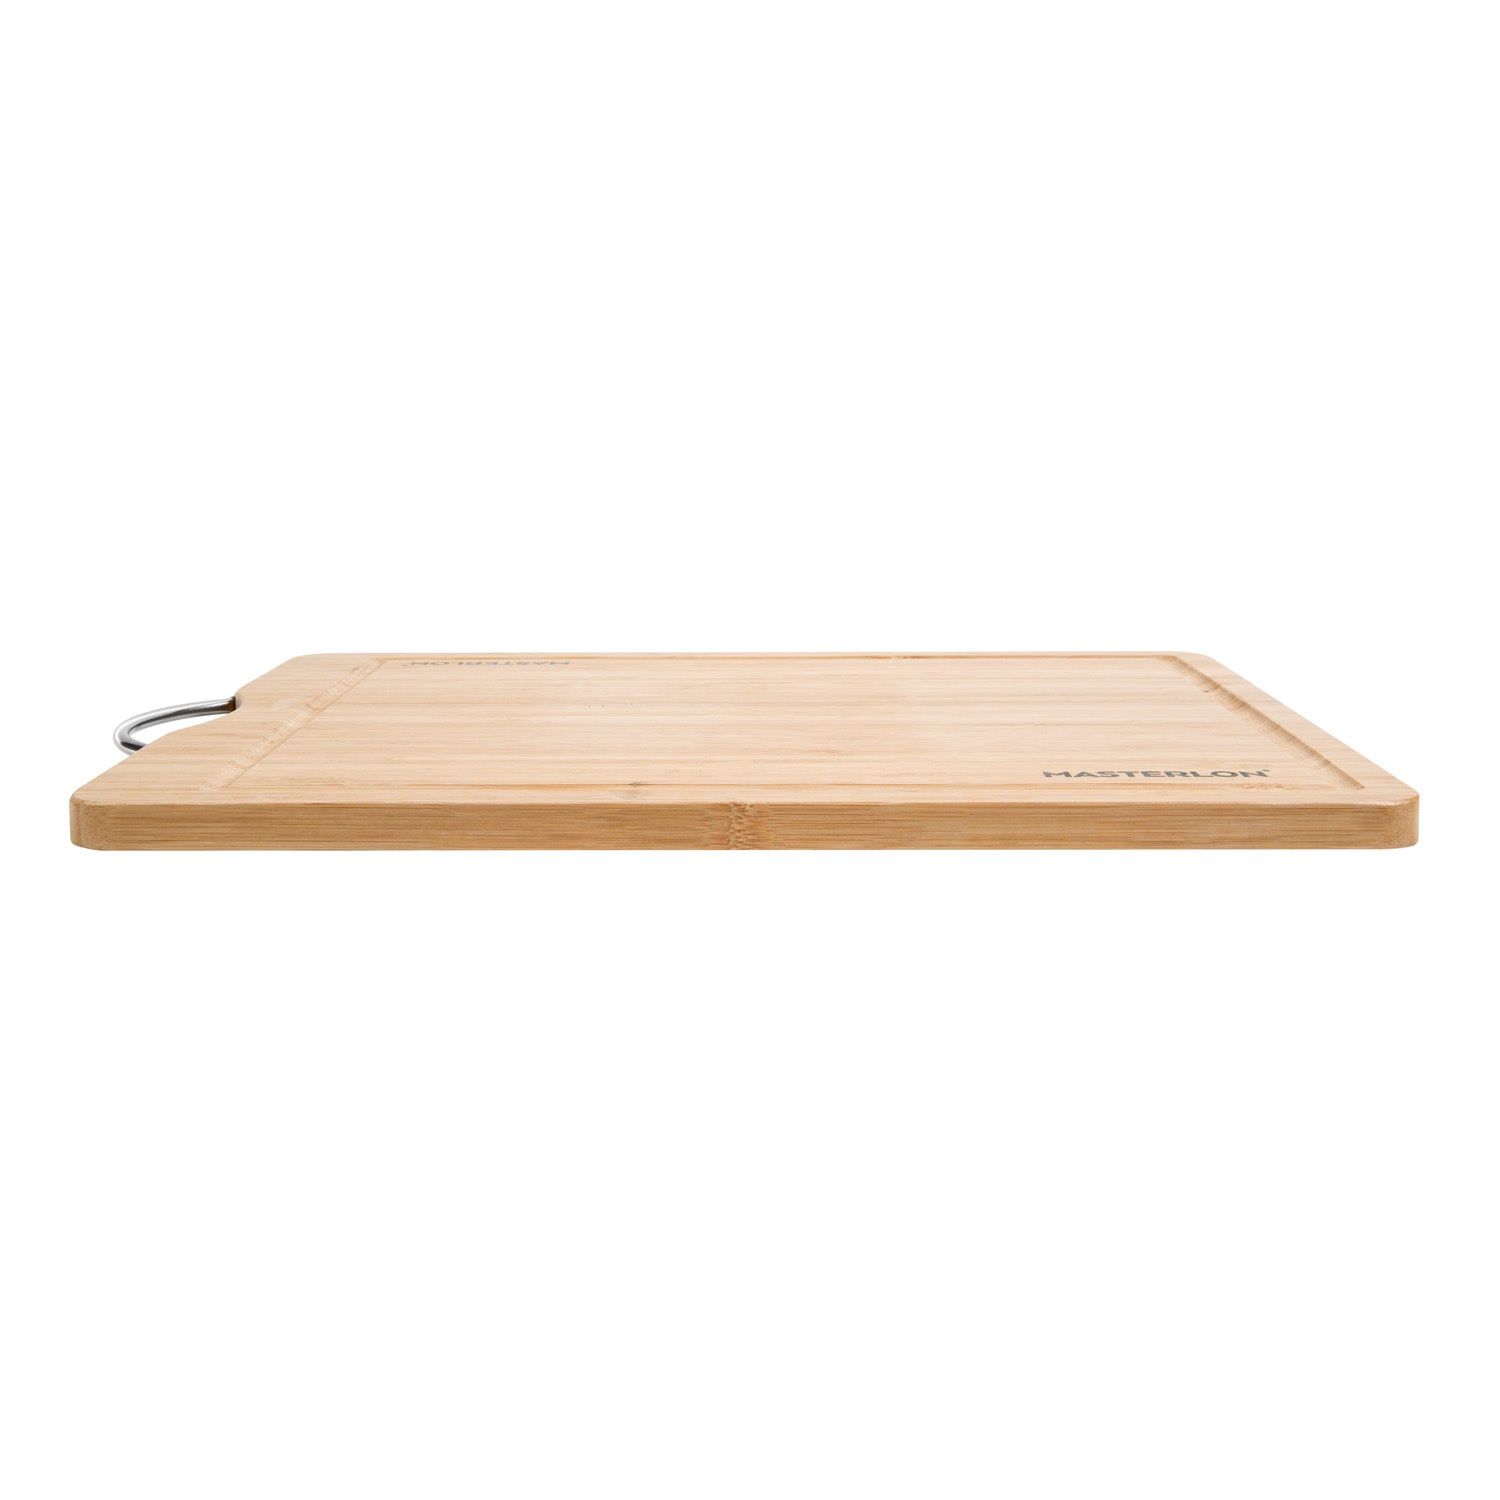 Maasterlon Wooden Cutting Board horizontal view